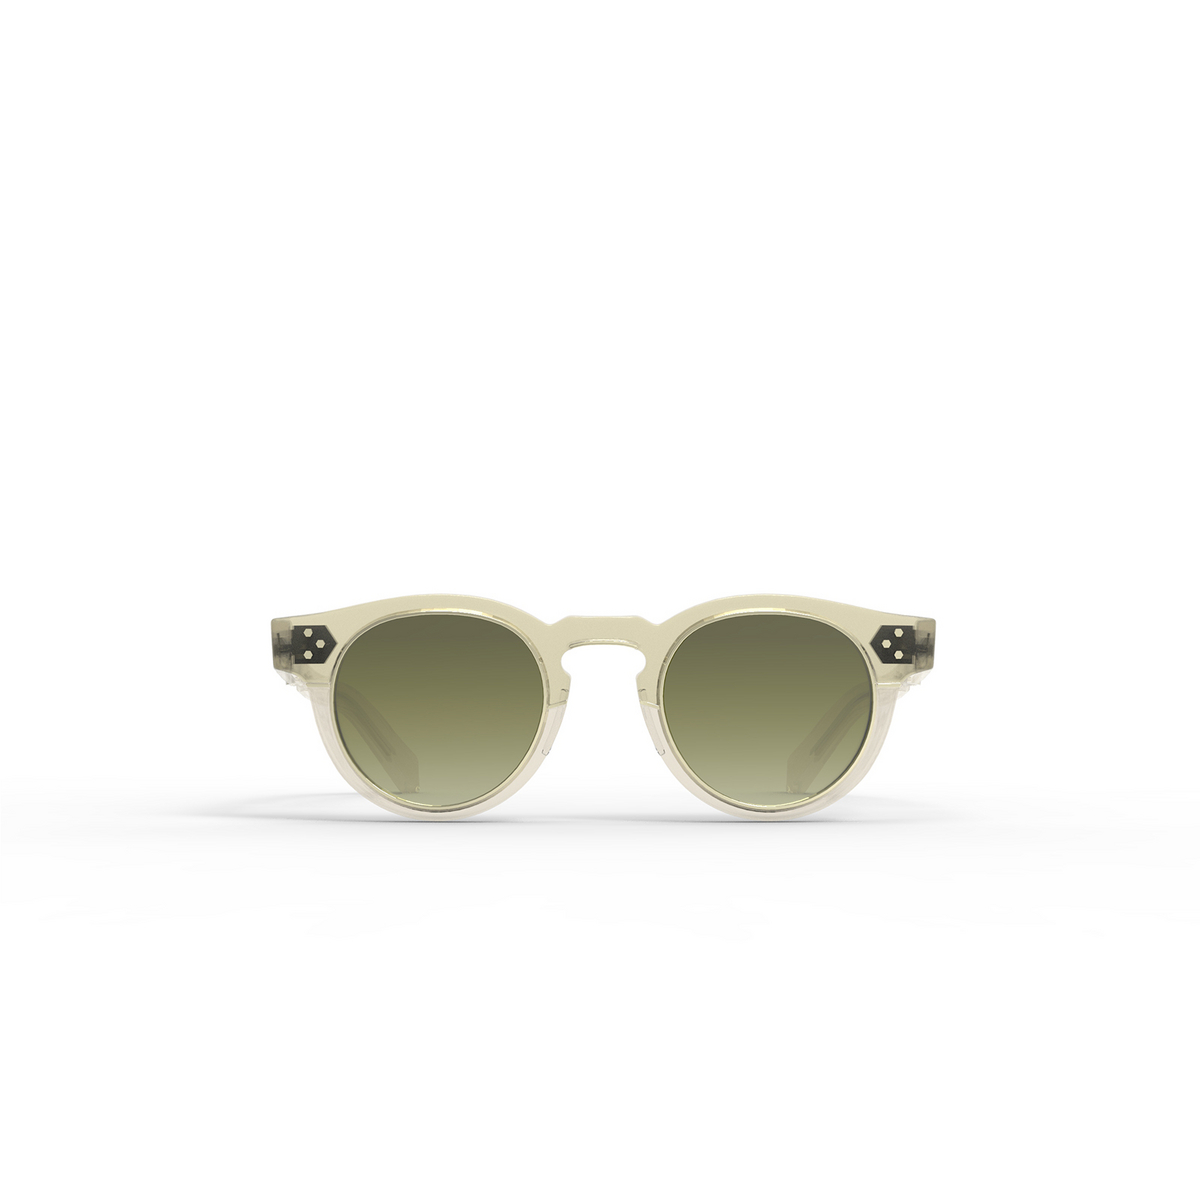 Mr. Leight KENNEDY S Sunglasses ARTCRY-12KG/ELMM Artist Crystal-12K White Gold - front view